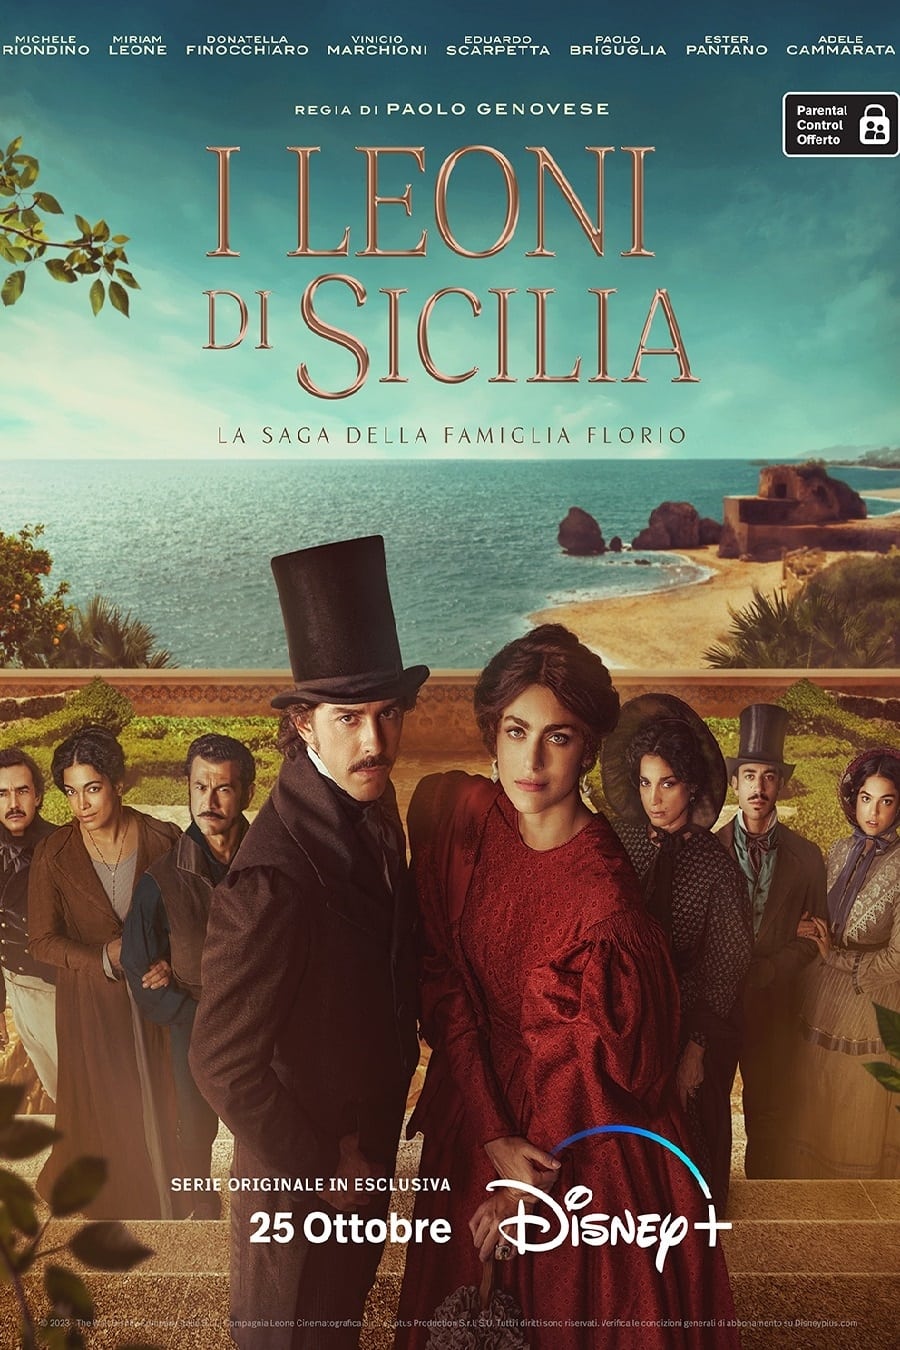 TV ratings for The Lions Of Sicily (I Leoni Di Sicilia) in Colombia. Disney+ TV series